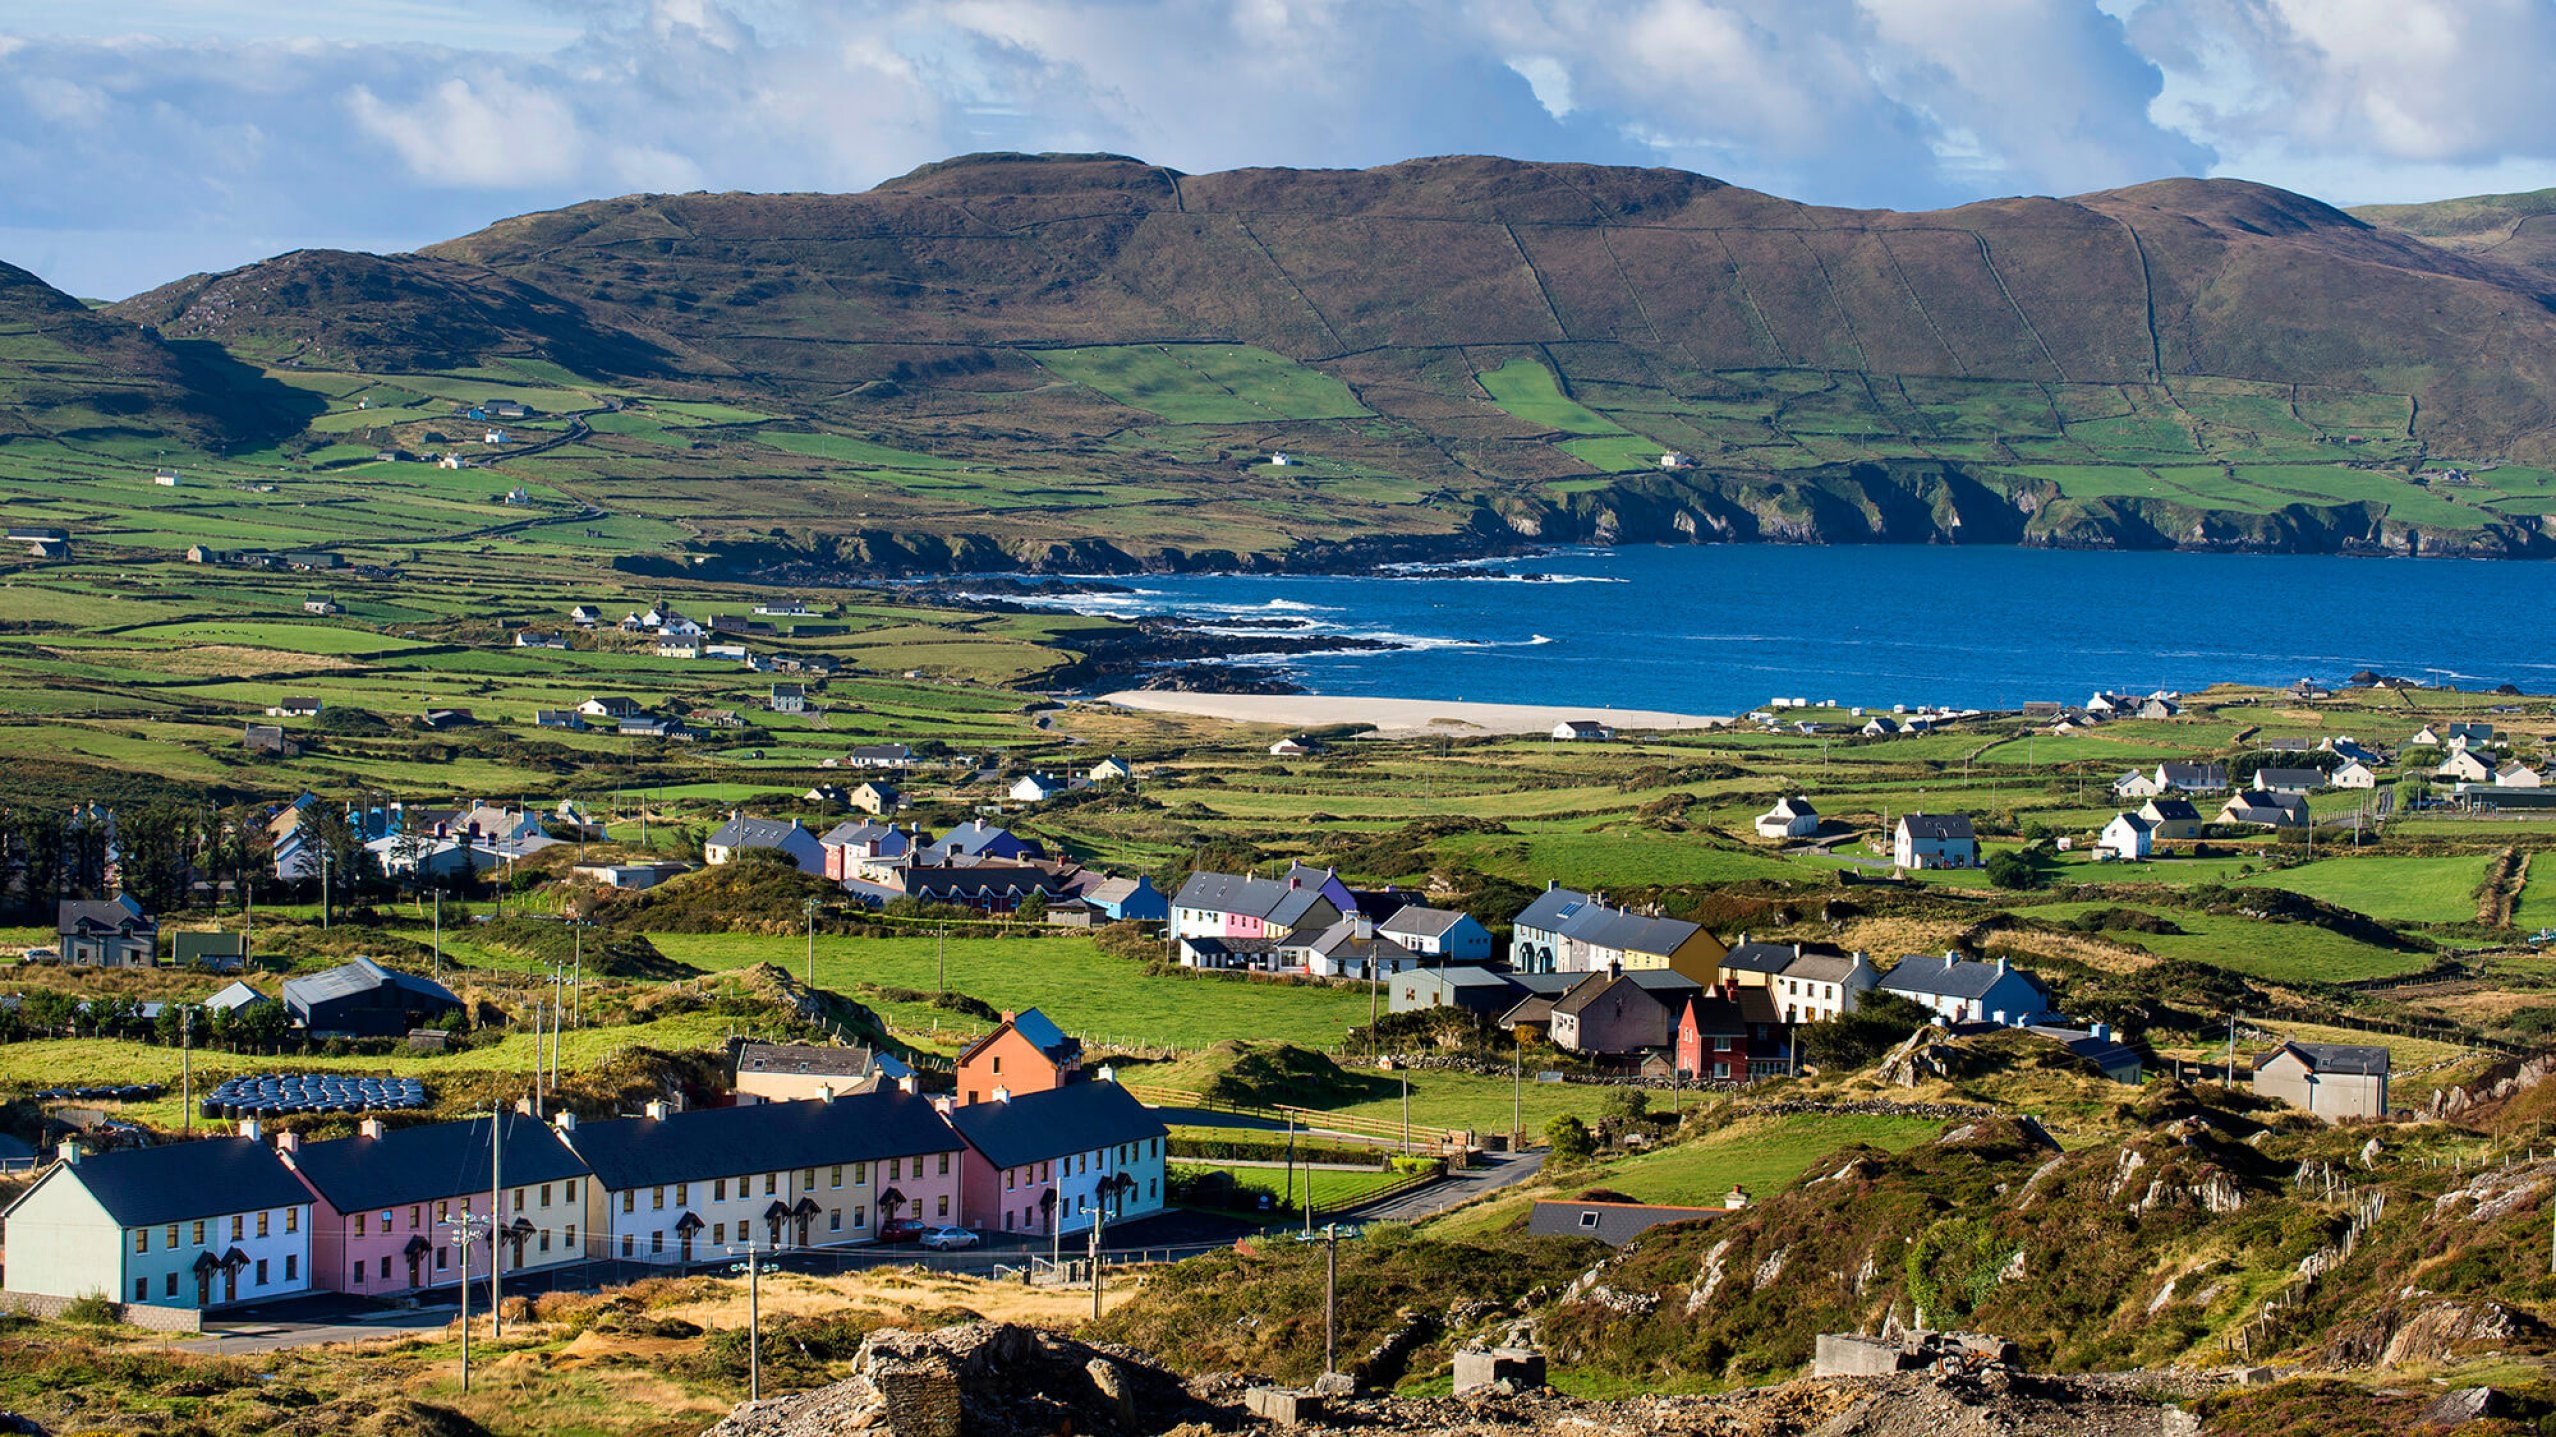 The colourful village of Allihies on the Beara peninsula, Ireland